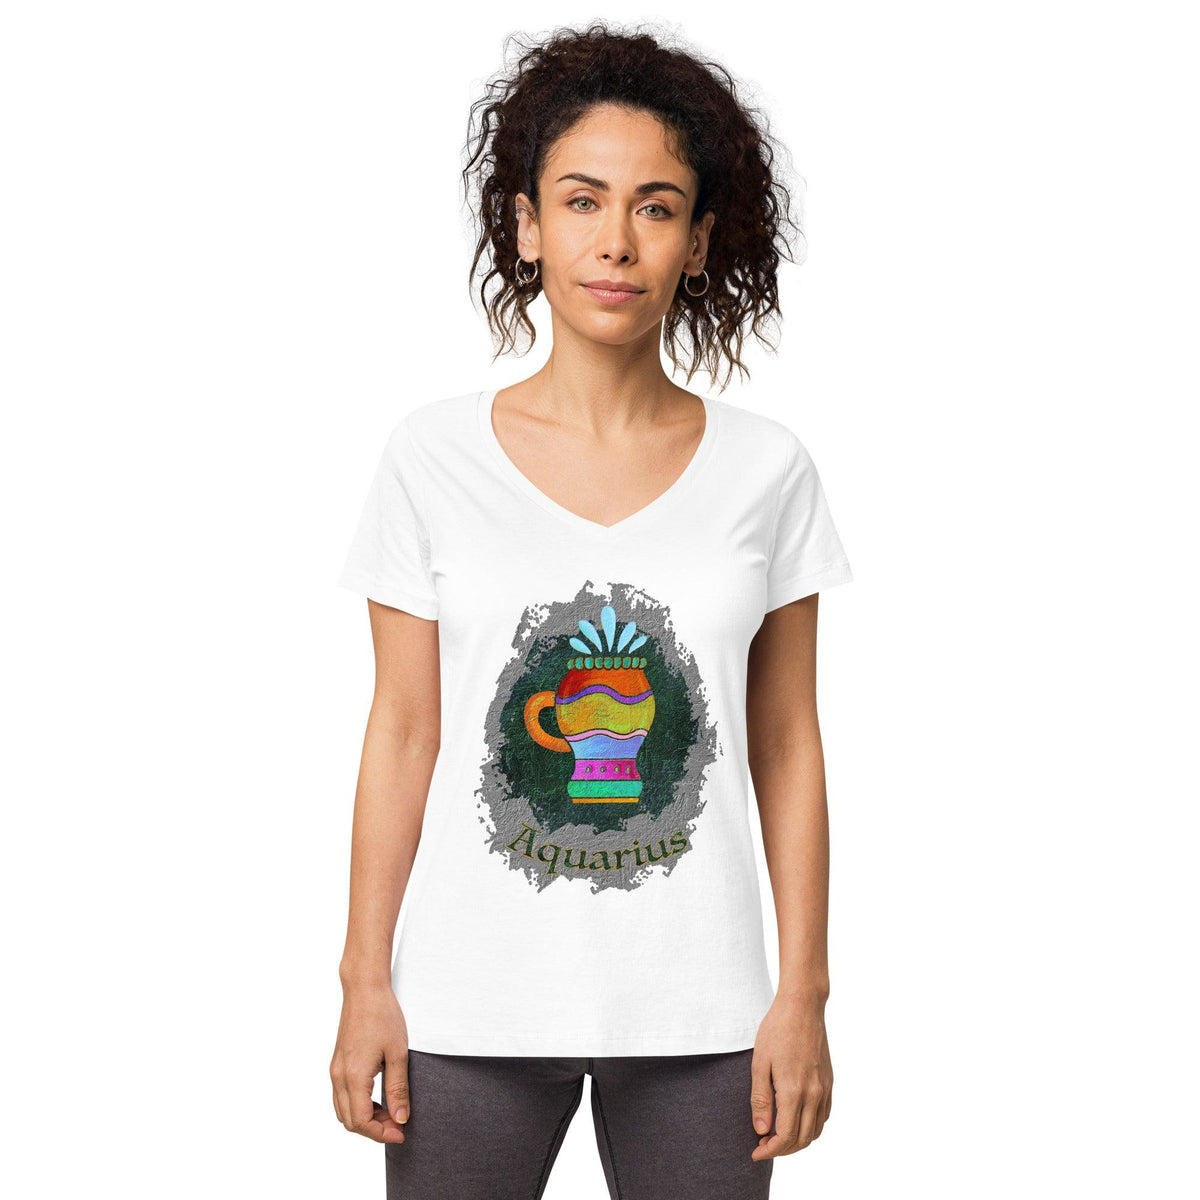 Aquarius Women’s Fitted V-neck T-shirt | Zodiac Series 11 - Beyond T-shirts